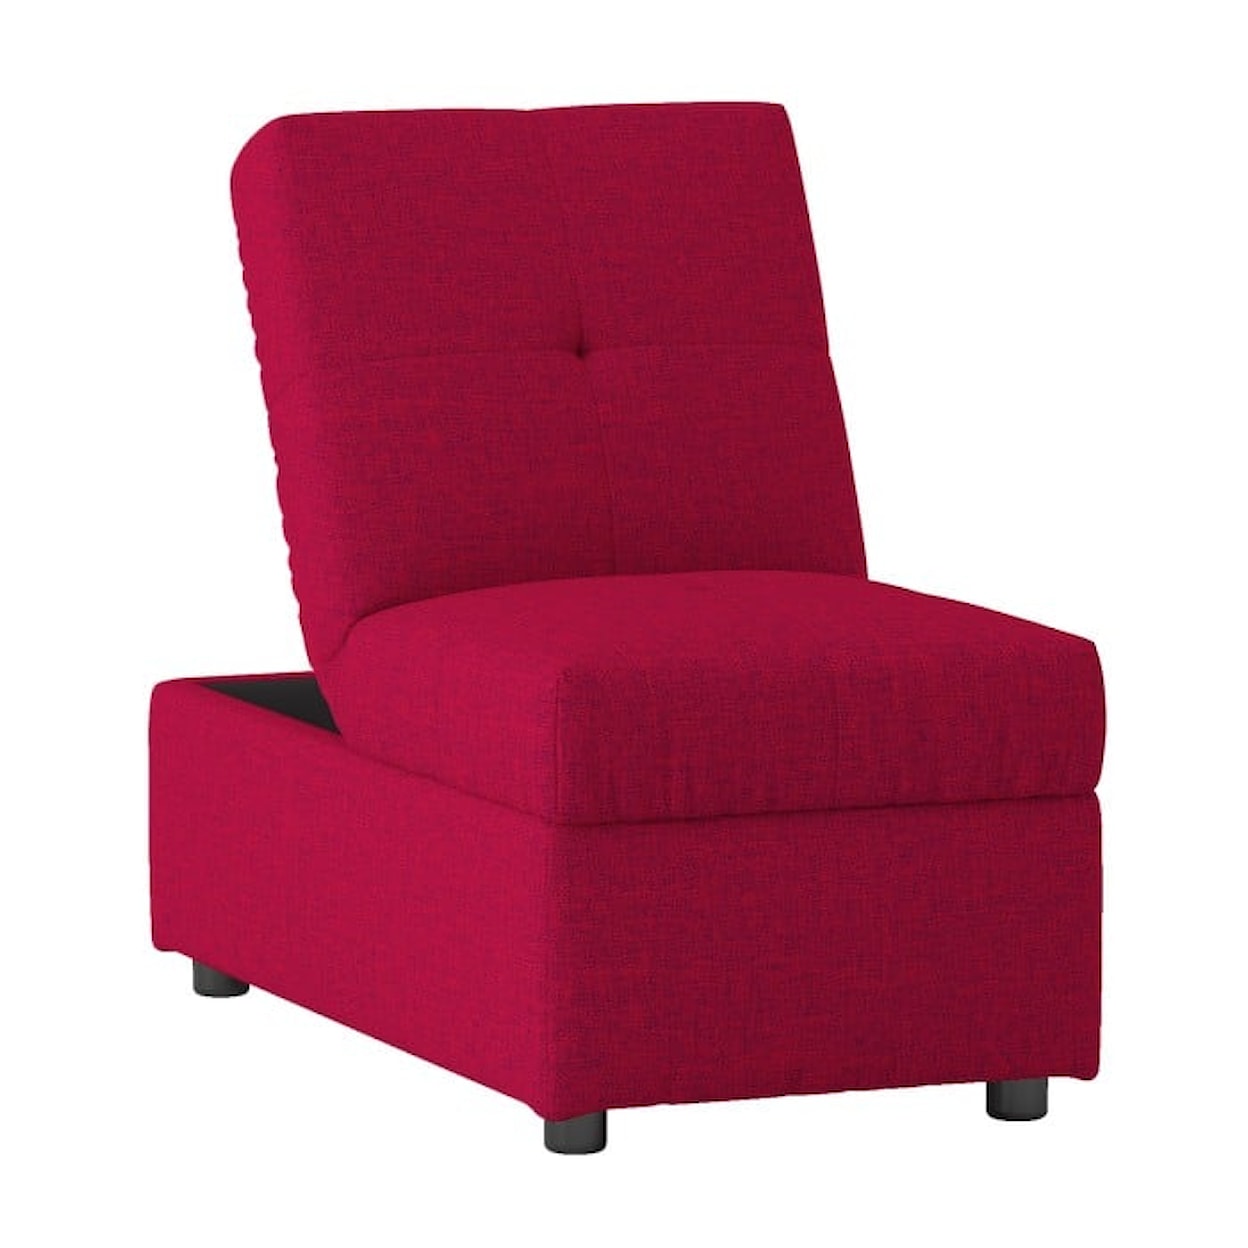 Homelegance Denby Storage Ottoman/Chair